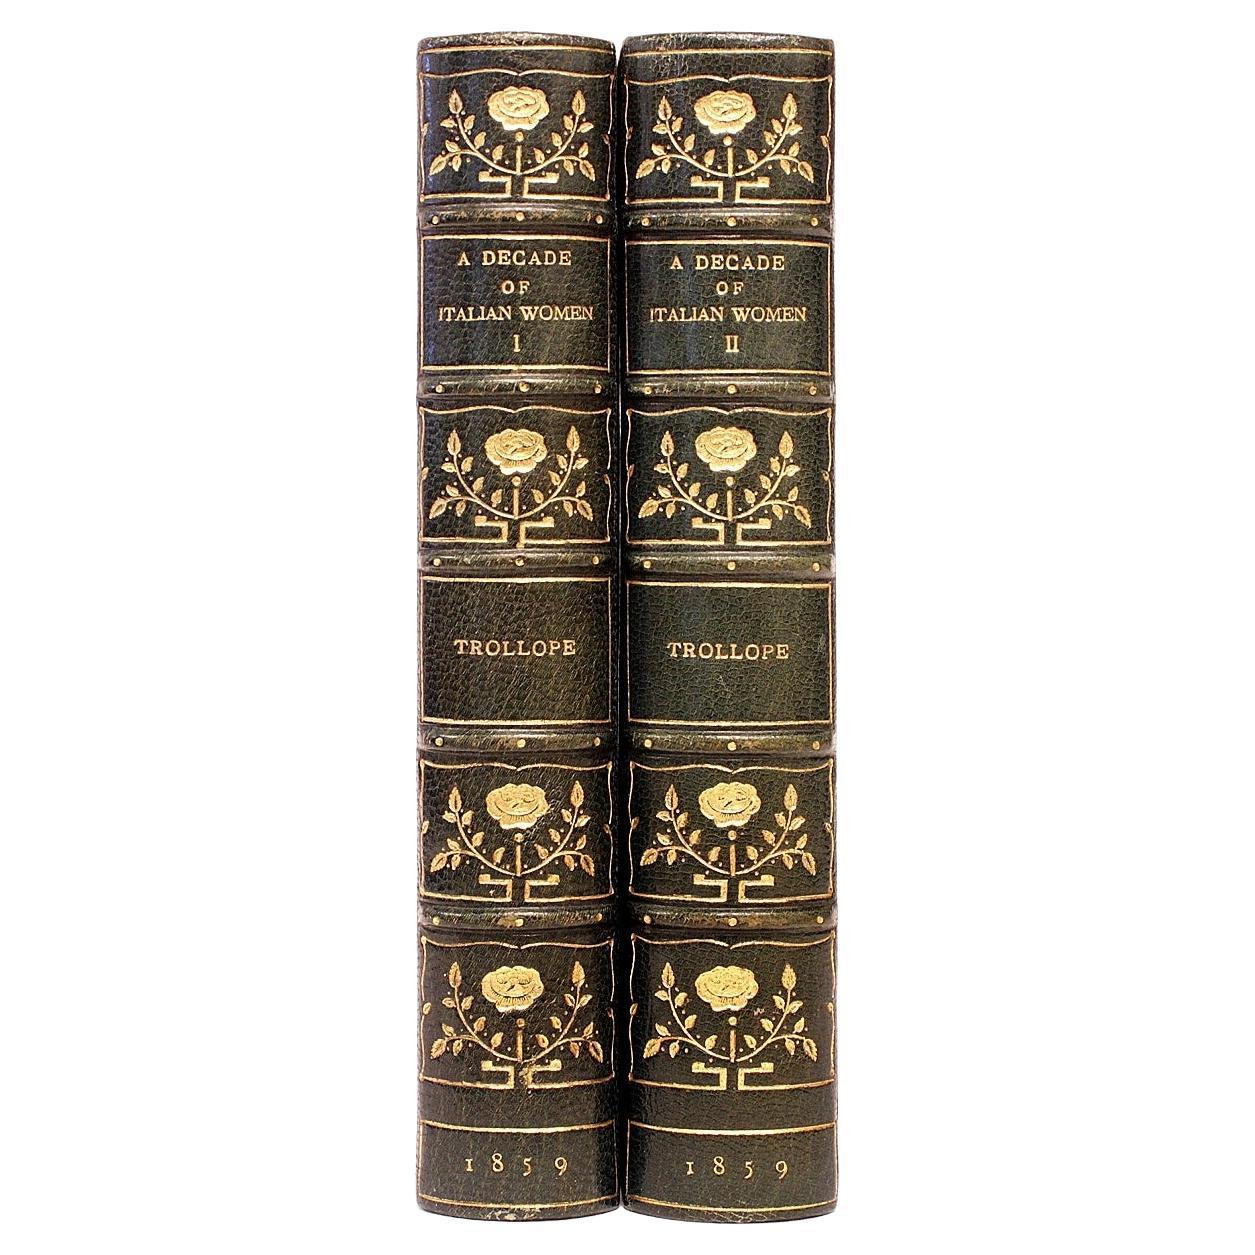 Trollope, A Decade of Italian Women, Erstausgabe, 2 Bände. 1859 in Leder gebunden!